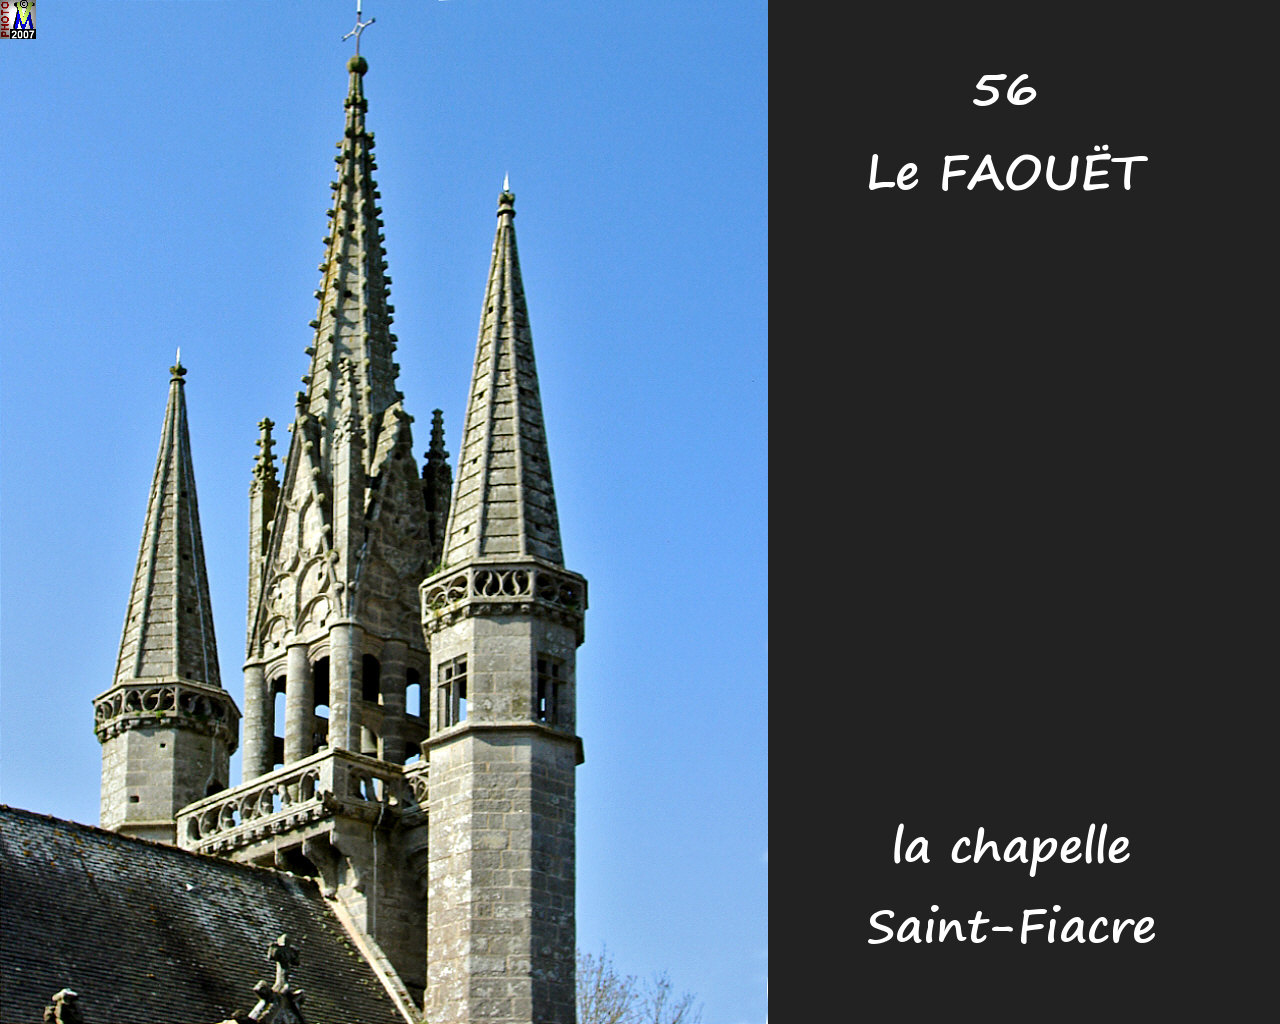 56FAOUET_chapelle-fiacre_112.jpg